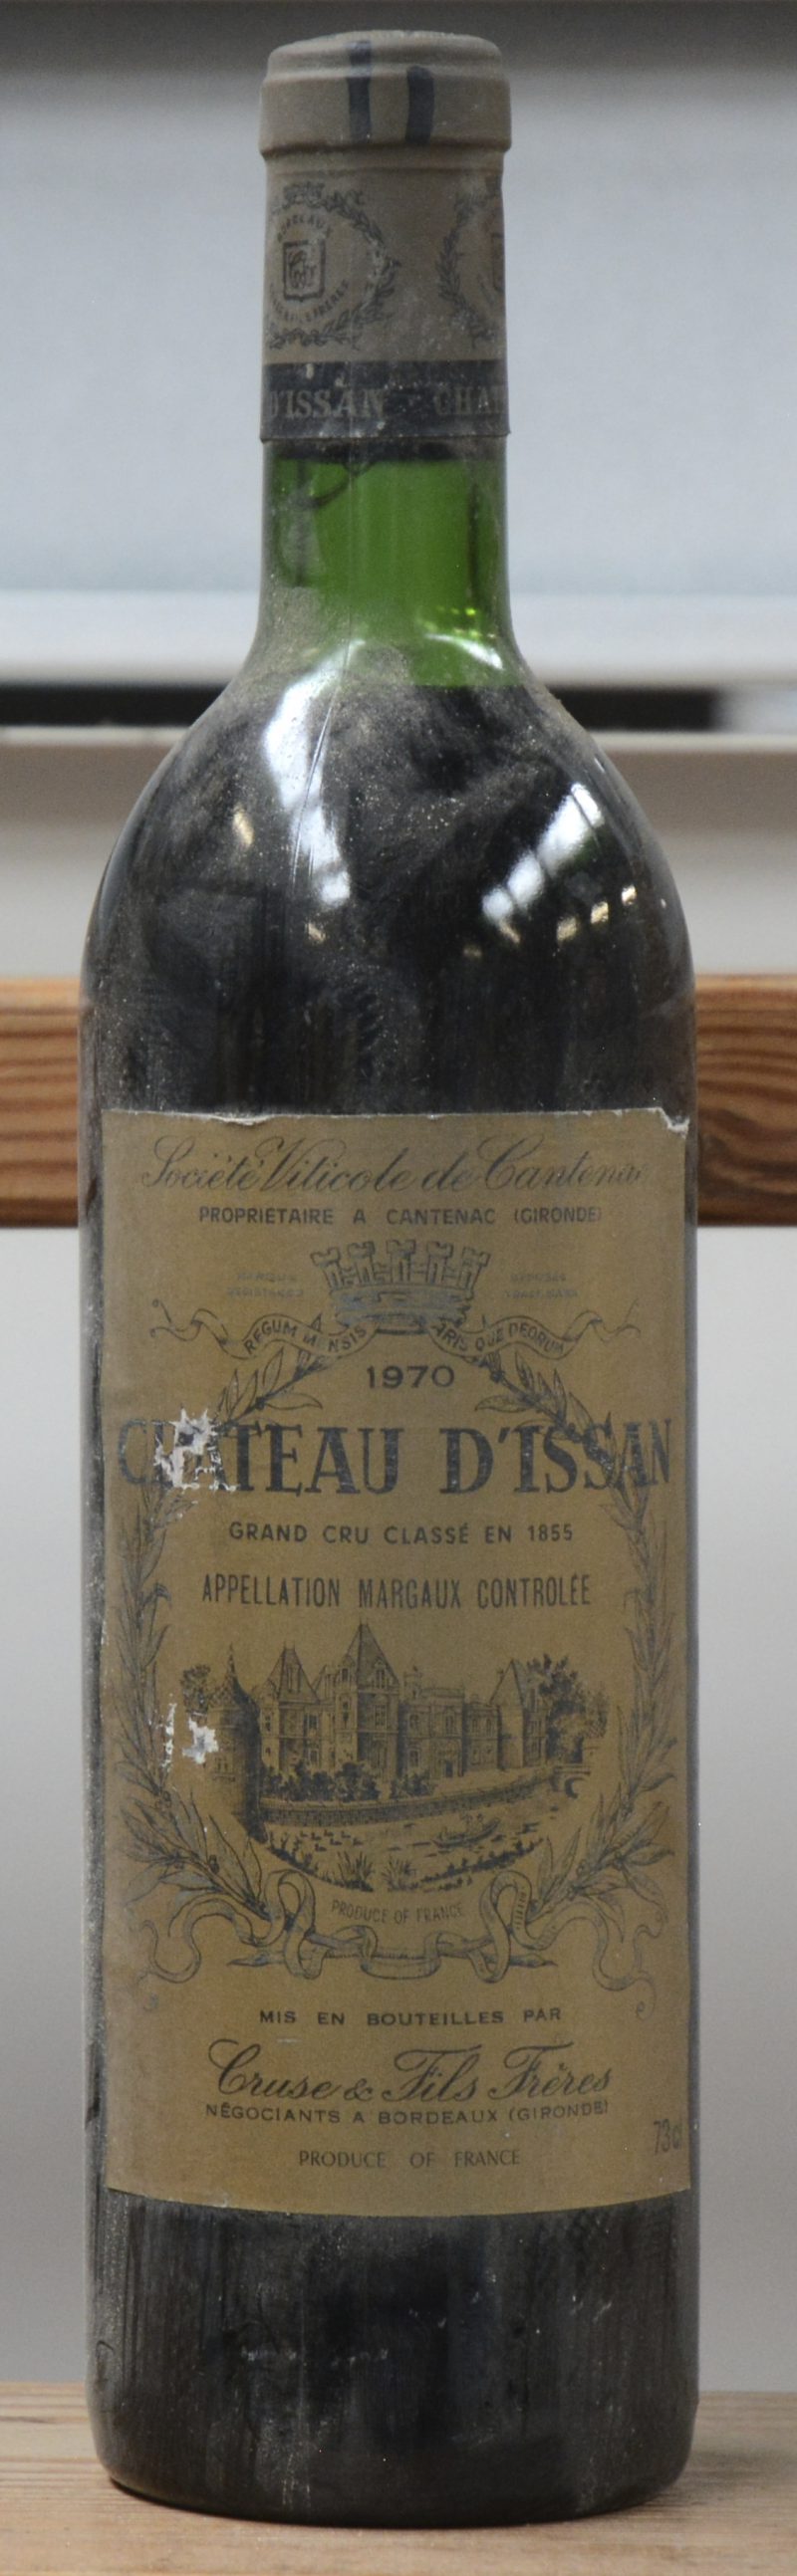 Ch. d’Issan A.C. Margaux 3e grand cru classé Cruse & Fils Frères M.O.  1970  aantal: 1 Bt. top shoulder